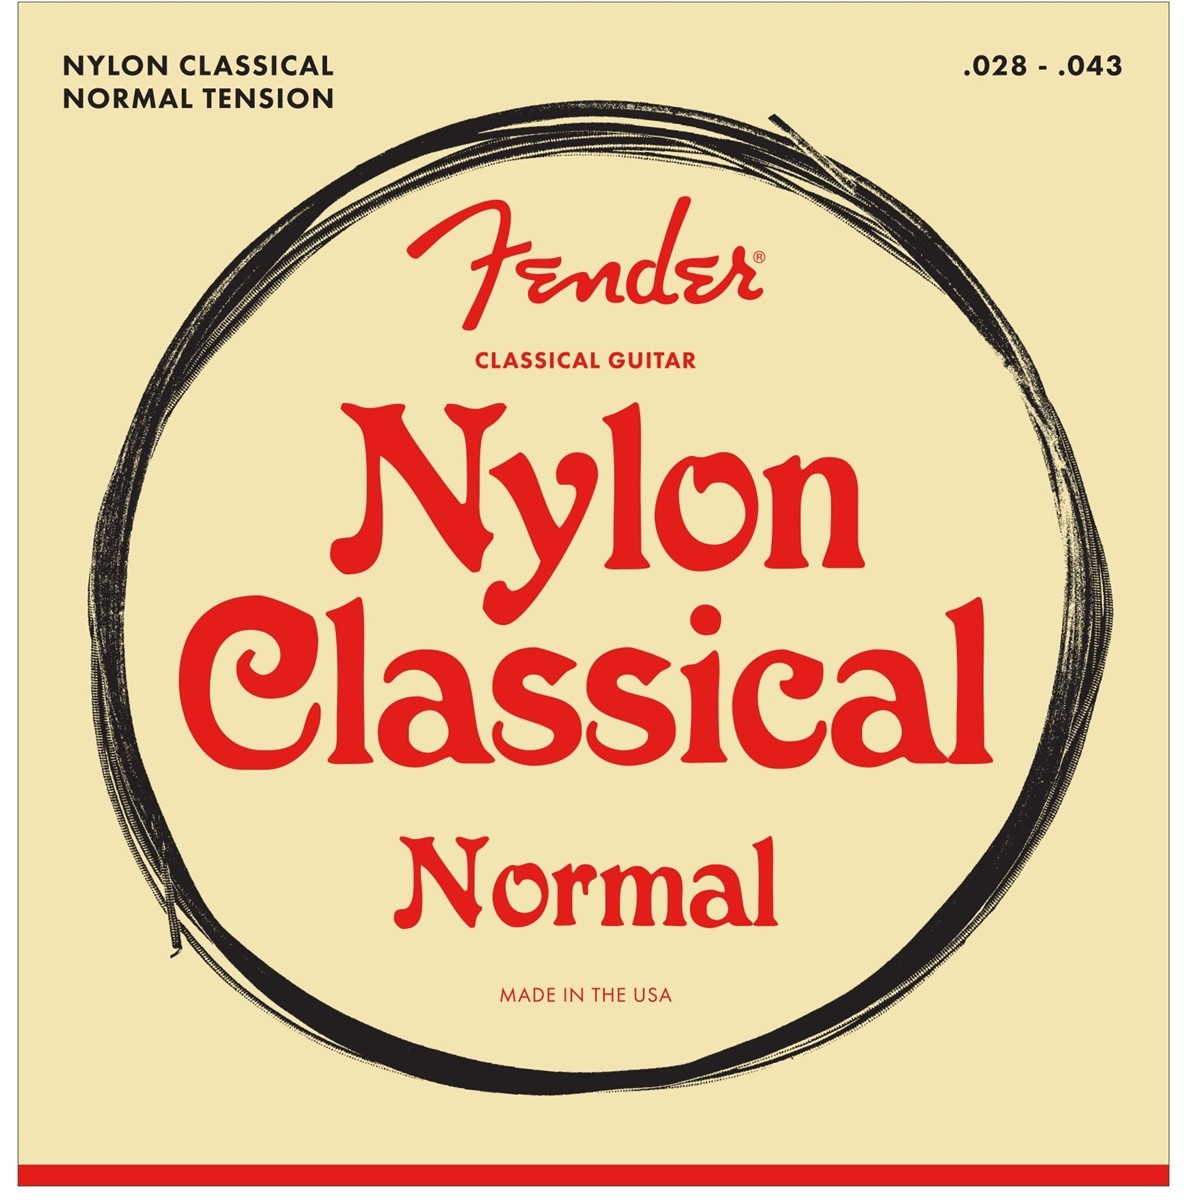 FENDER Corde Nylon Classical Tension Normale